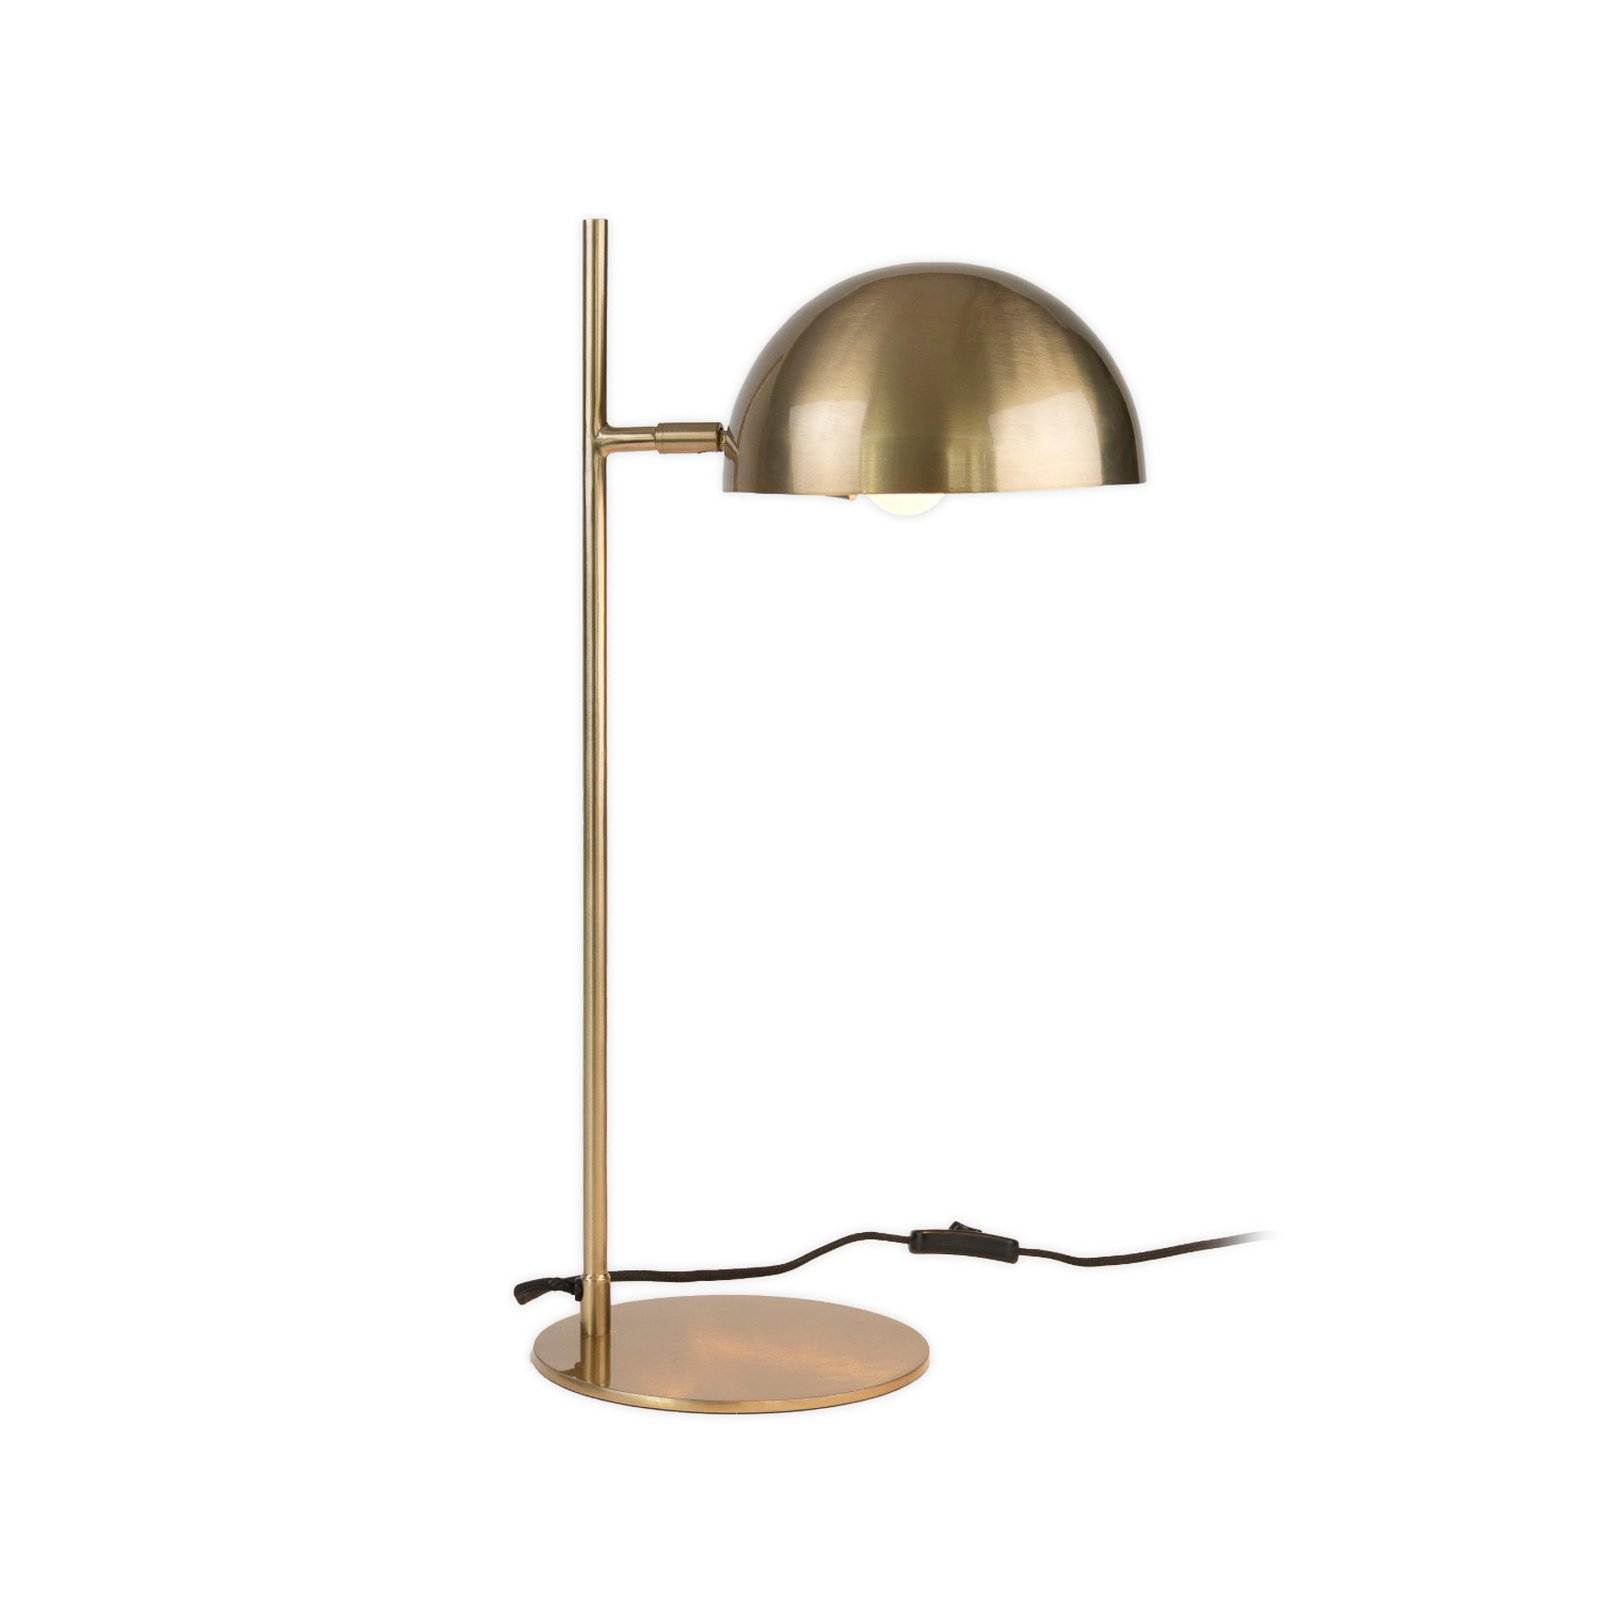 Miro bordlampe, guldfarvet, højde 58 cm, jern/messing